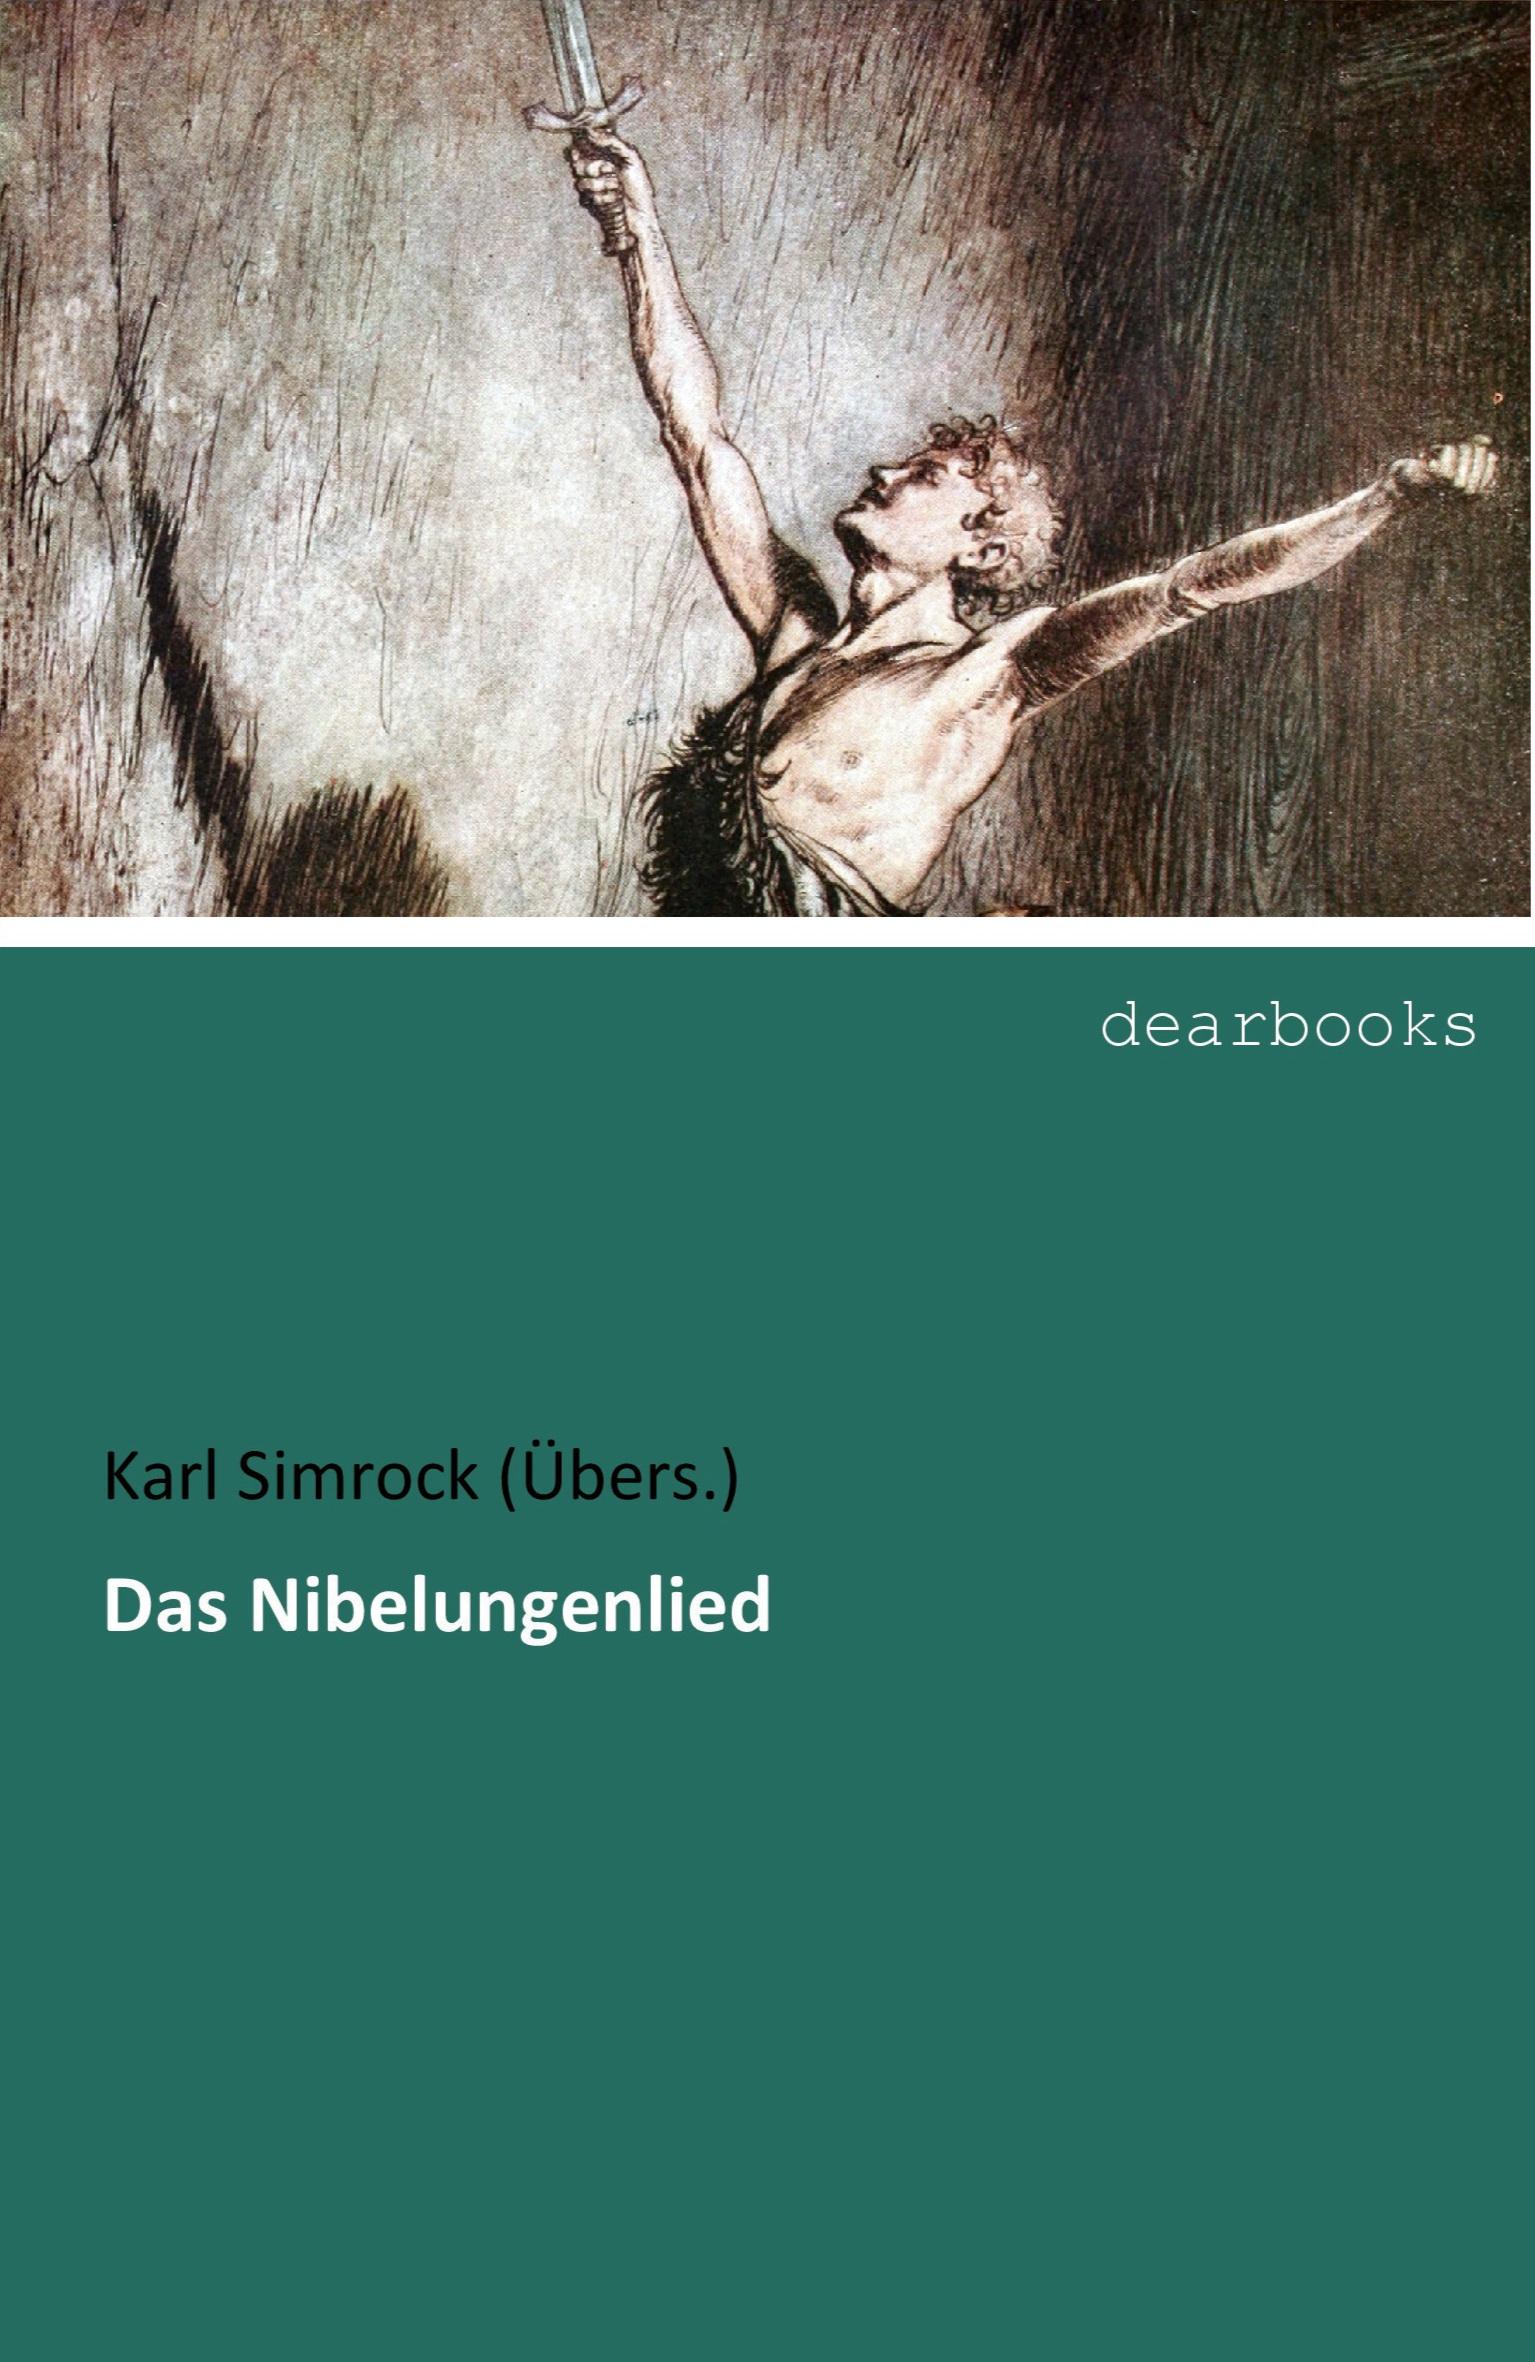 Das Nibelungenlied | Karl Simrock (Übers. | Taschenbuch | Paperback | 308 S. | Deutsch | 2016 | dearbooks | EAN 9783954550043 - Simrock (Übers., Karl